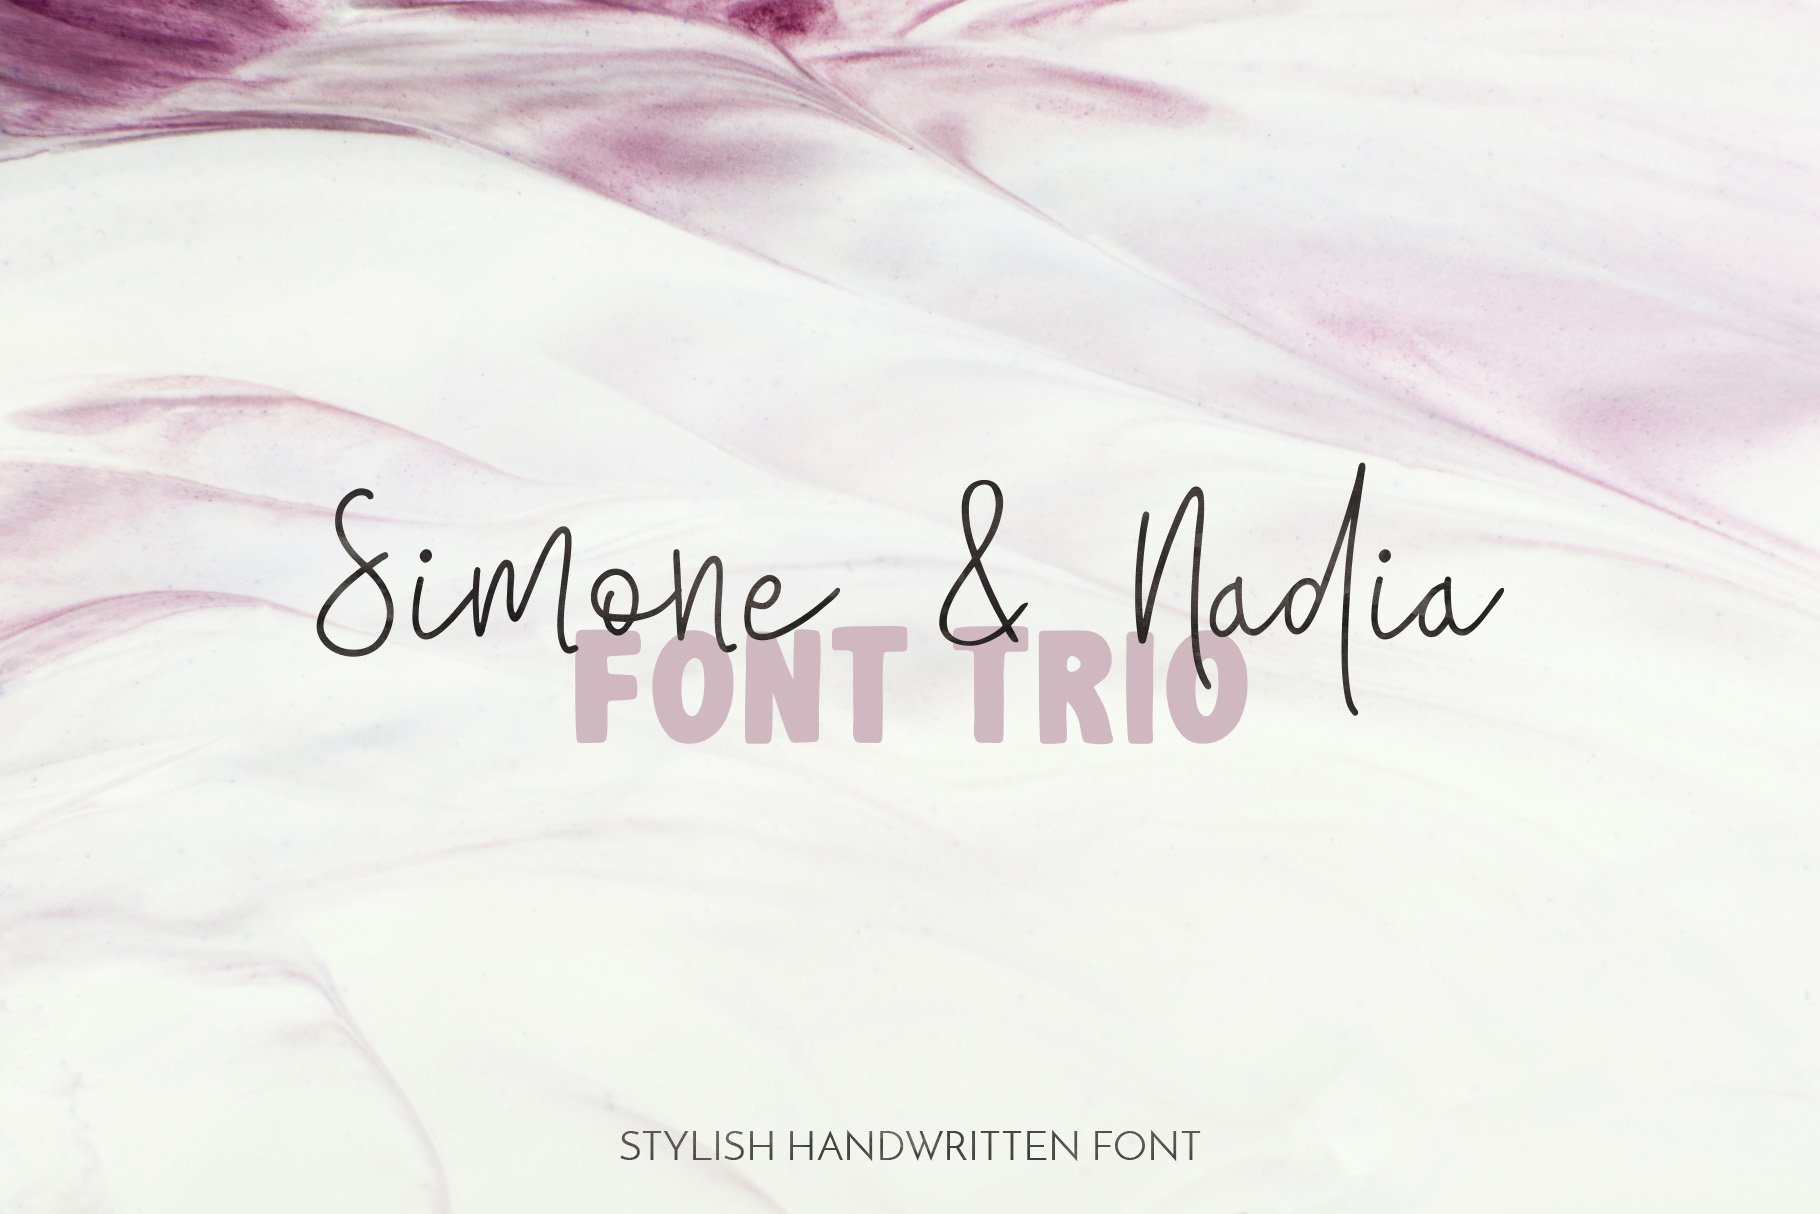 Simone & Nadia Font Trio cover image.